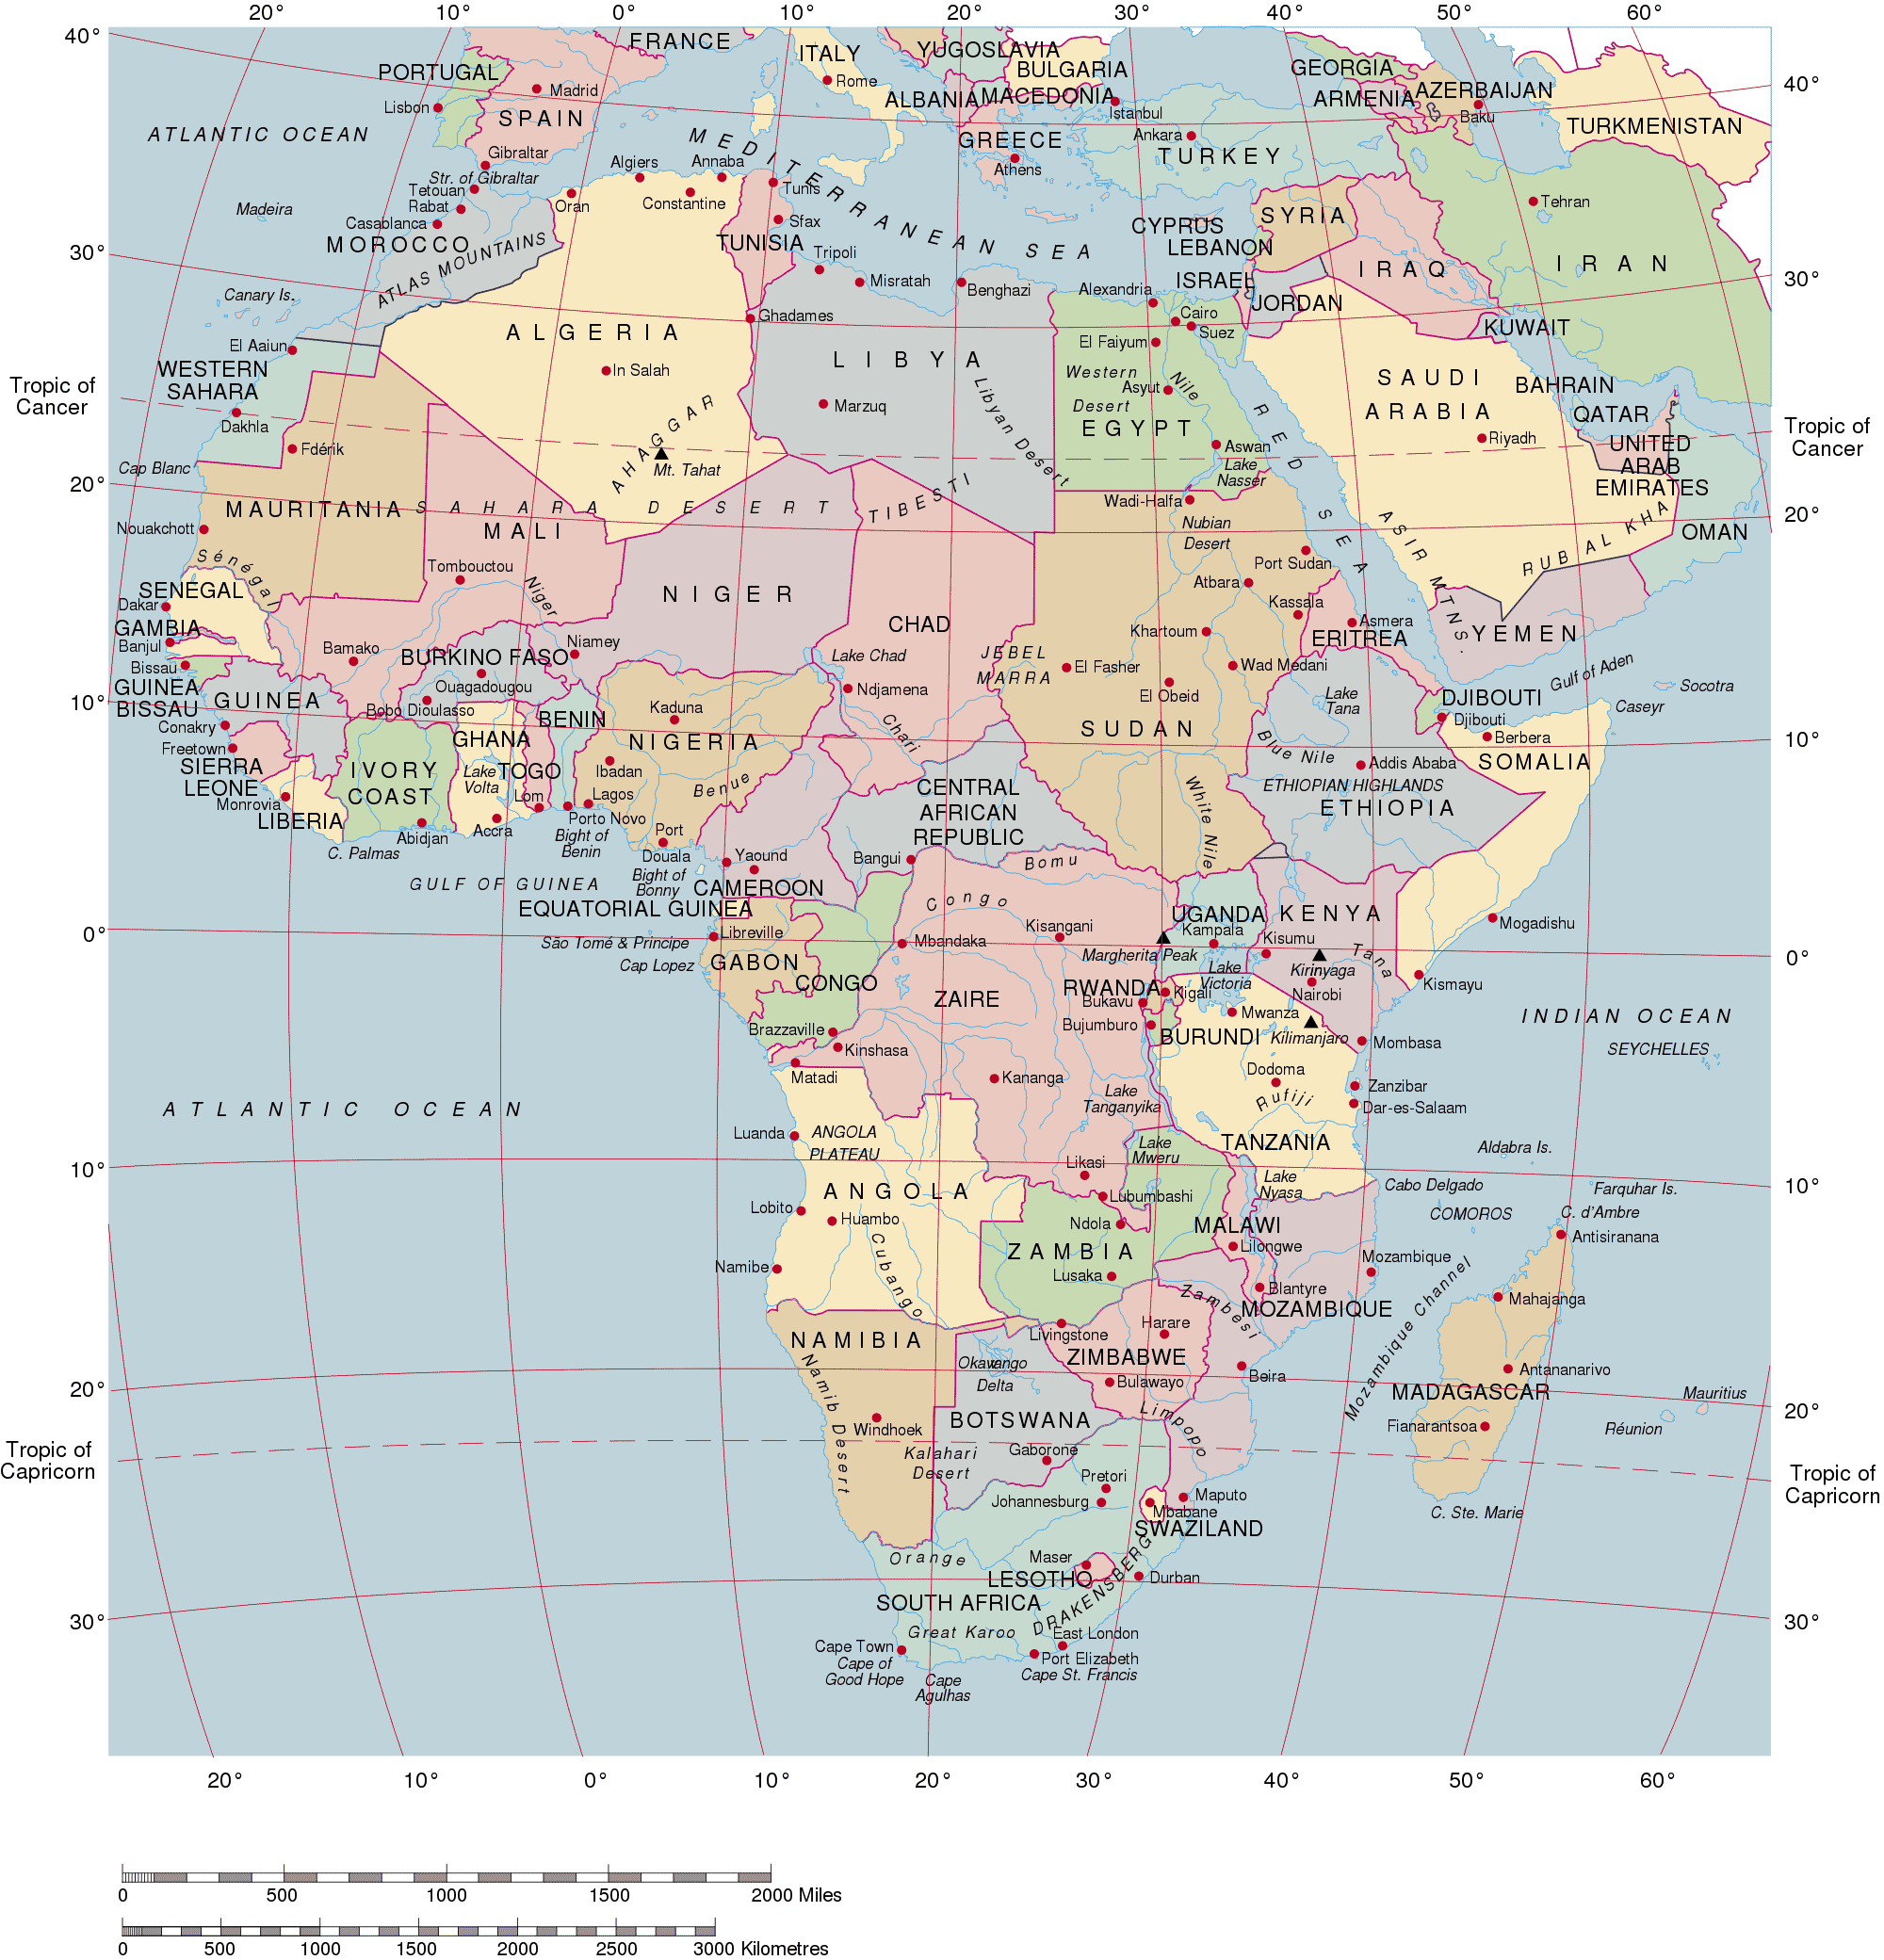 Mapa Politico de África - Tamaño completo